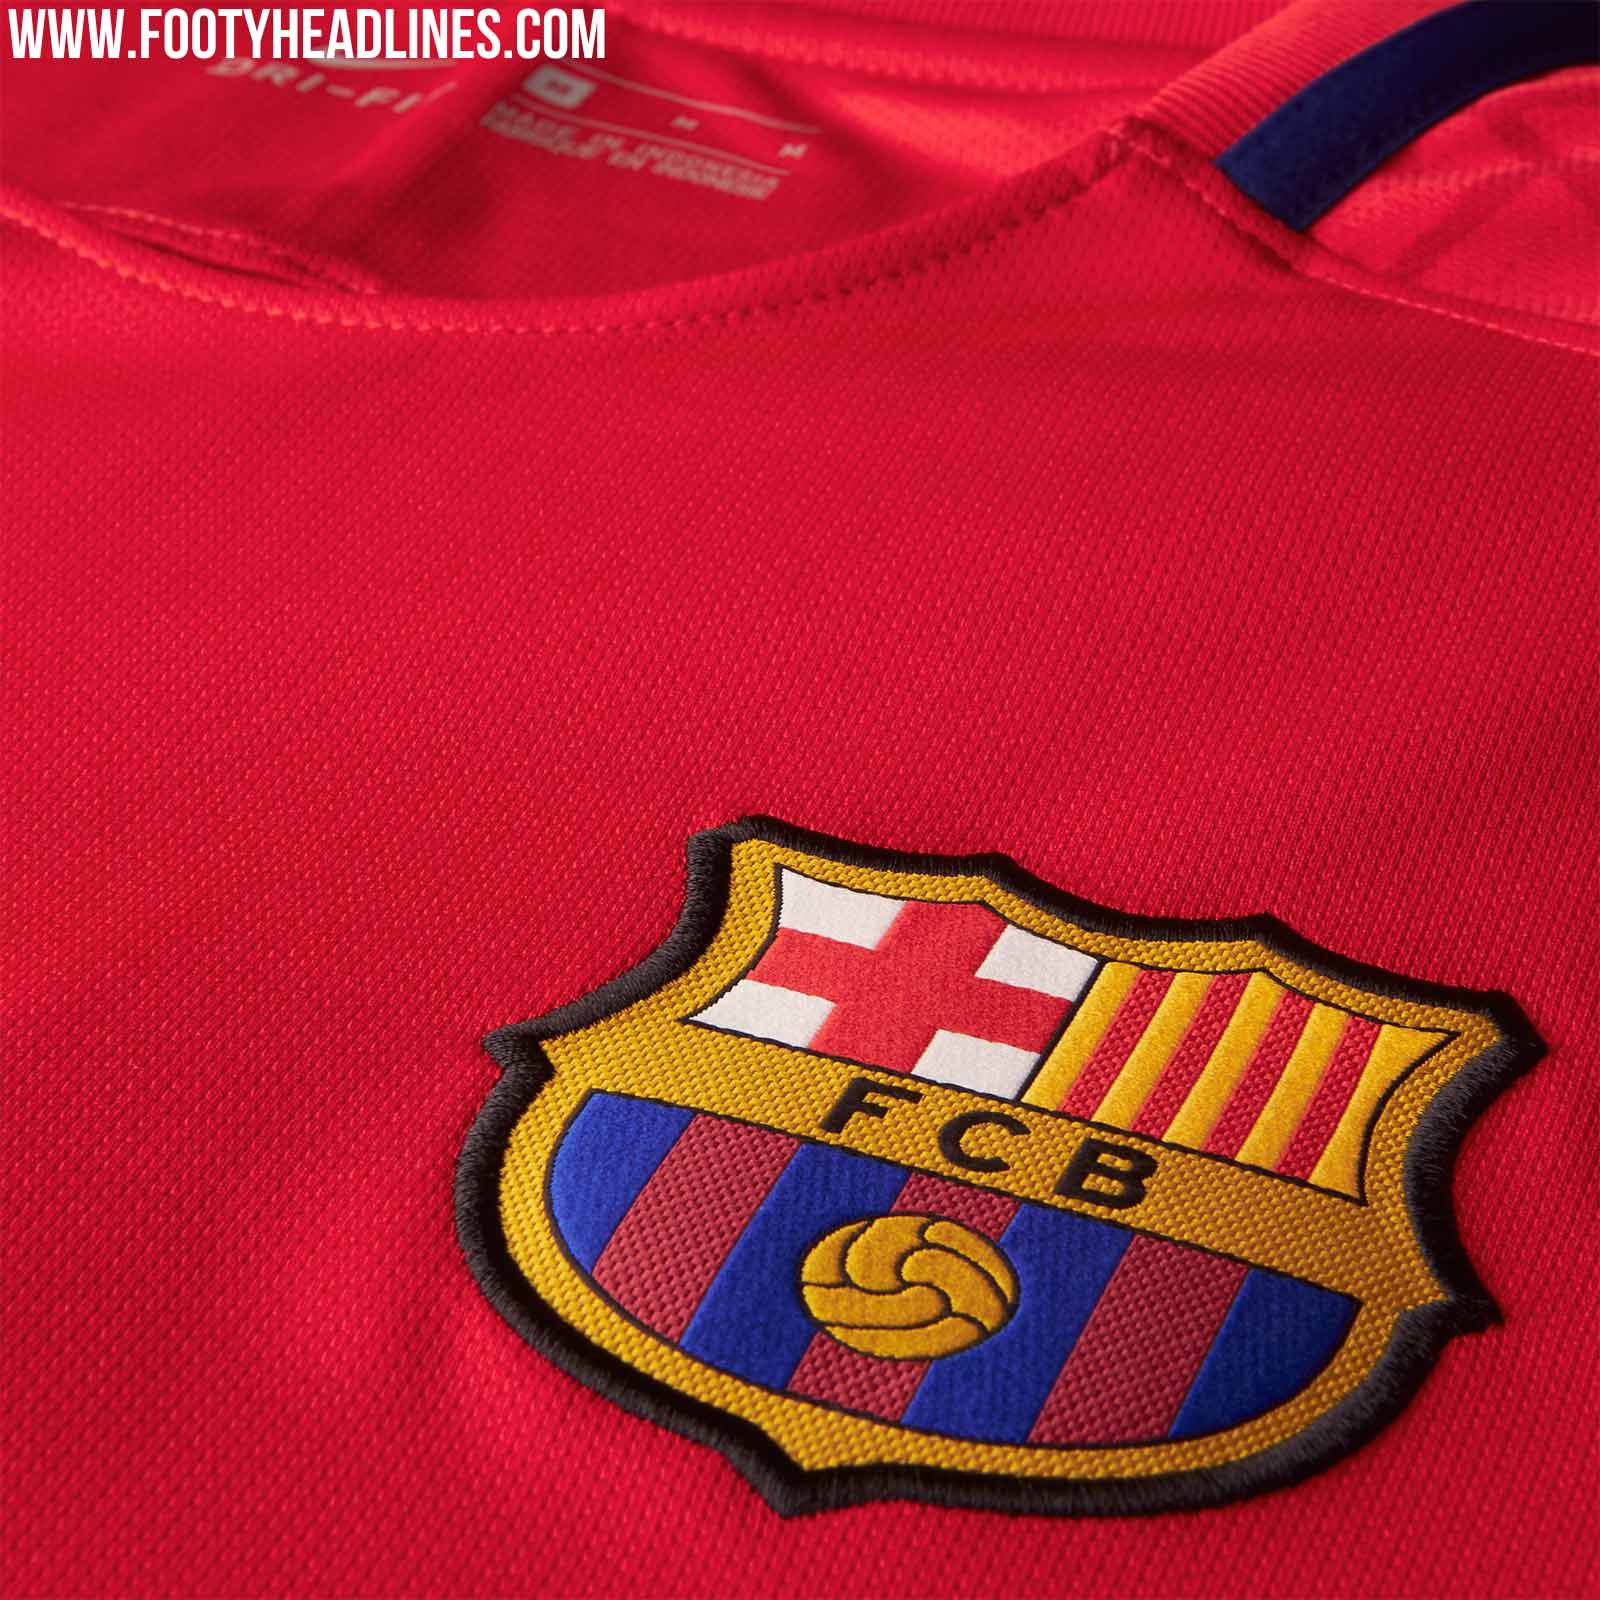 Barcelona 17-18 Goalkeeper Kits Revealed - Footy Headlines